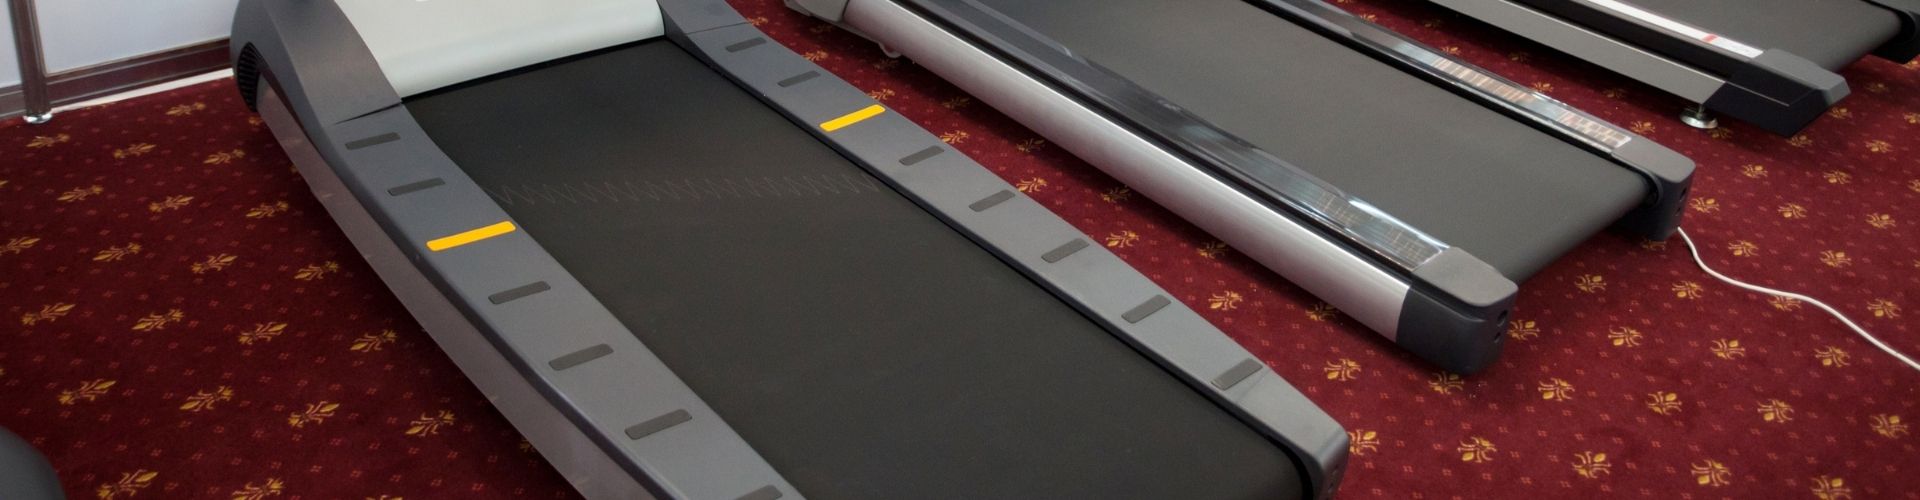 treadmill mat for carpet